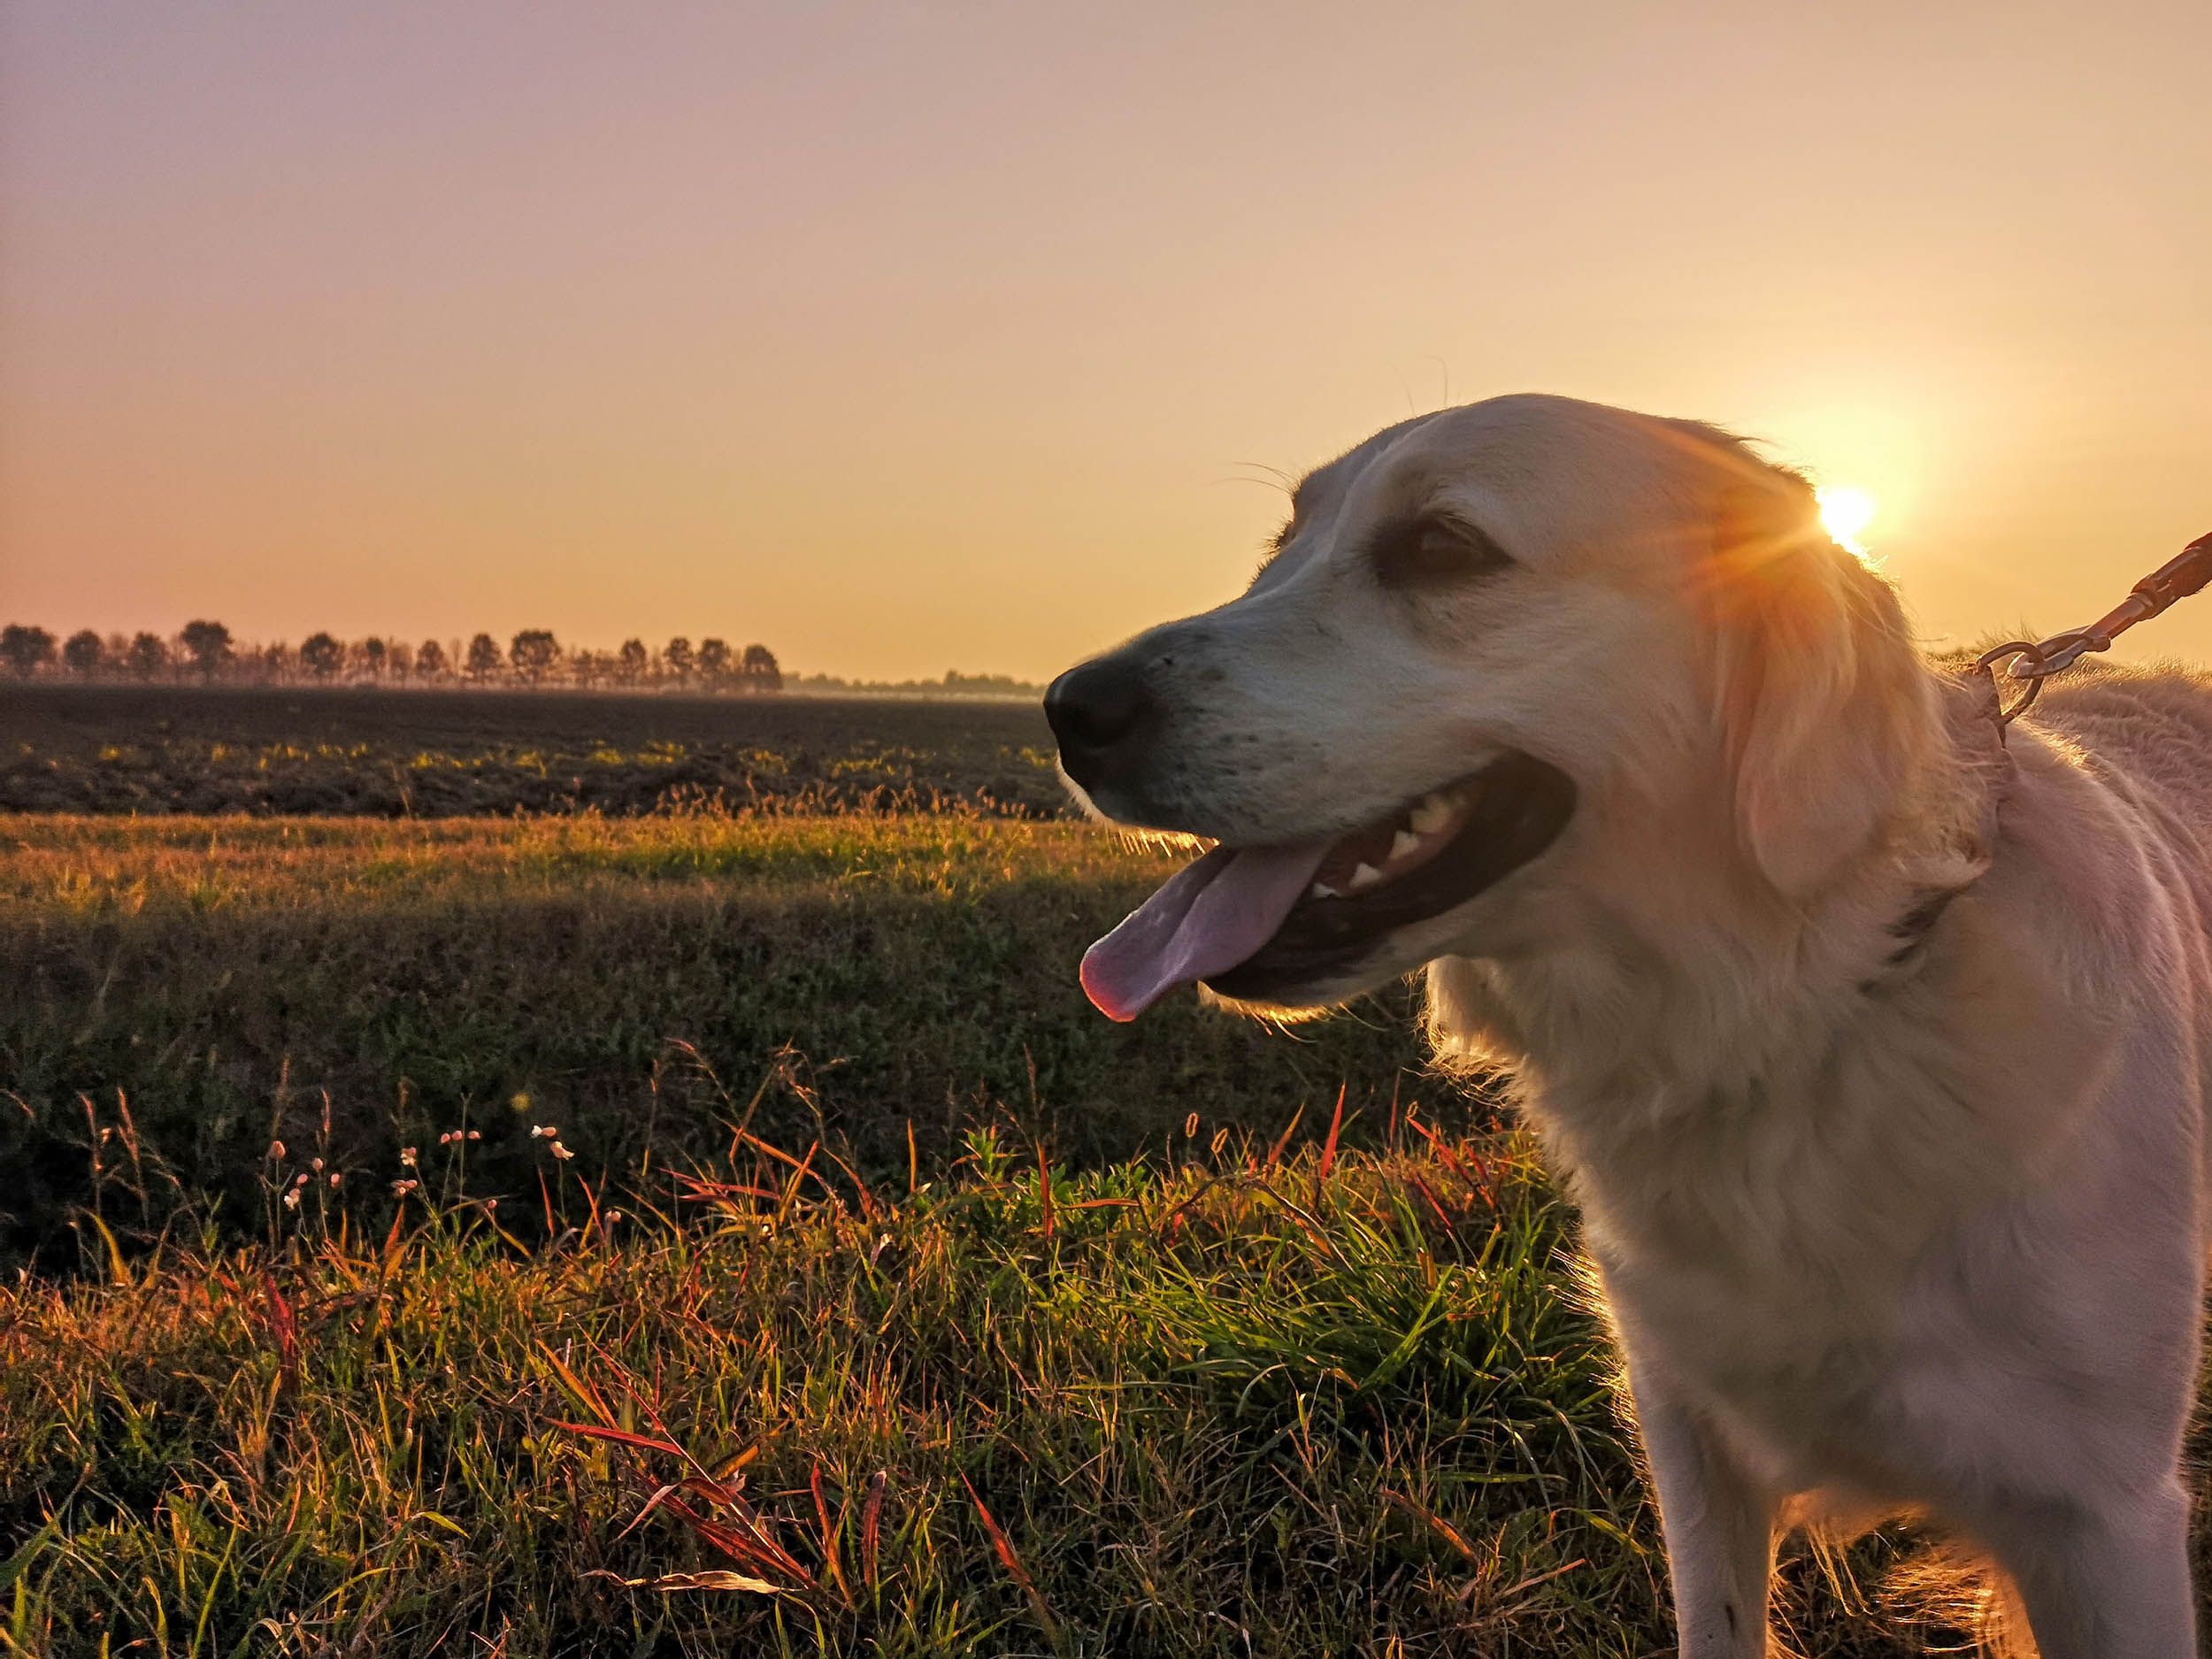 Older golden retriever dog standing in grassy field during sunset